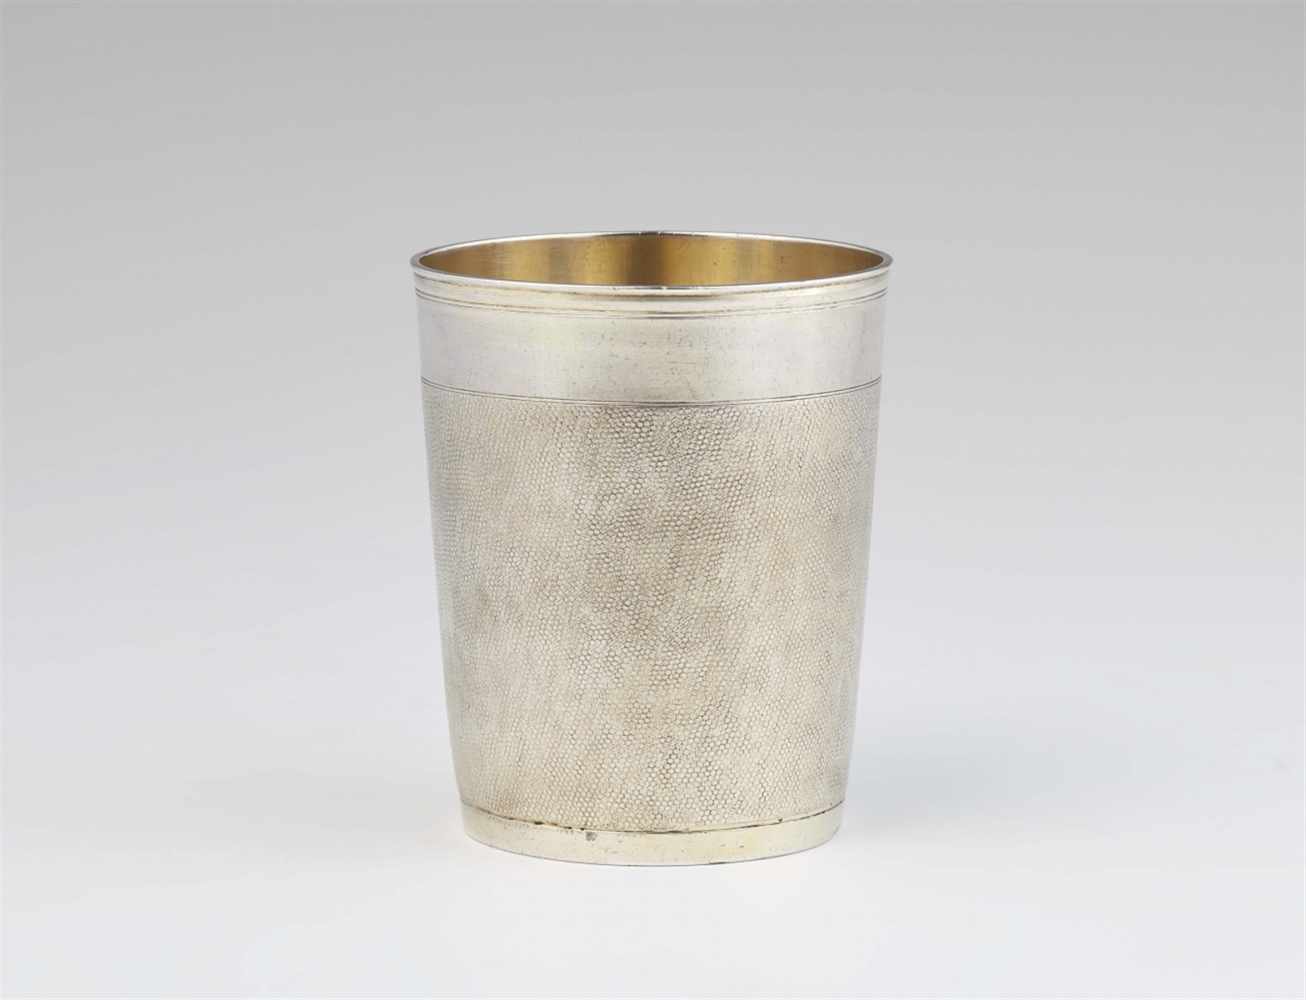 An Augsburg silver gilt snakeskin beakerTapering beaker on a flat base. H 8.3 cm, weight 130 g.